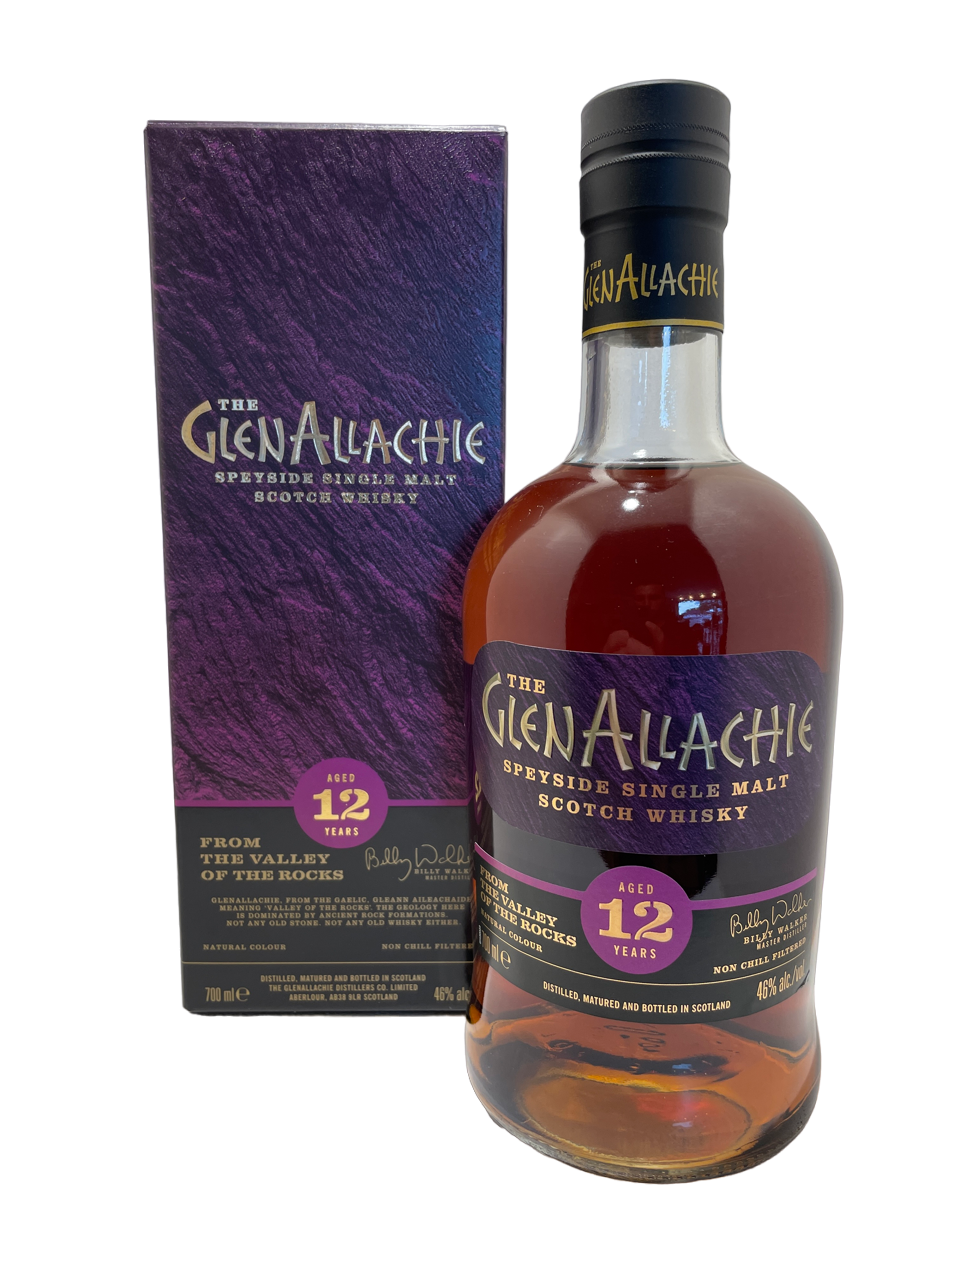 scotch whisky single malt écosse scotish spiritueux spirit speyside billy walker the glenallachie 12 years old